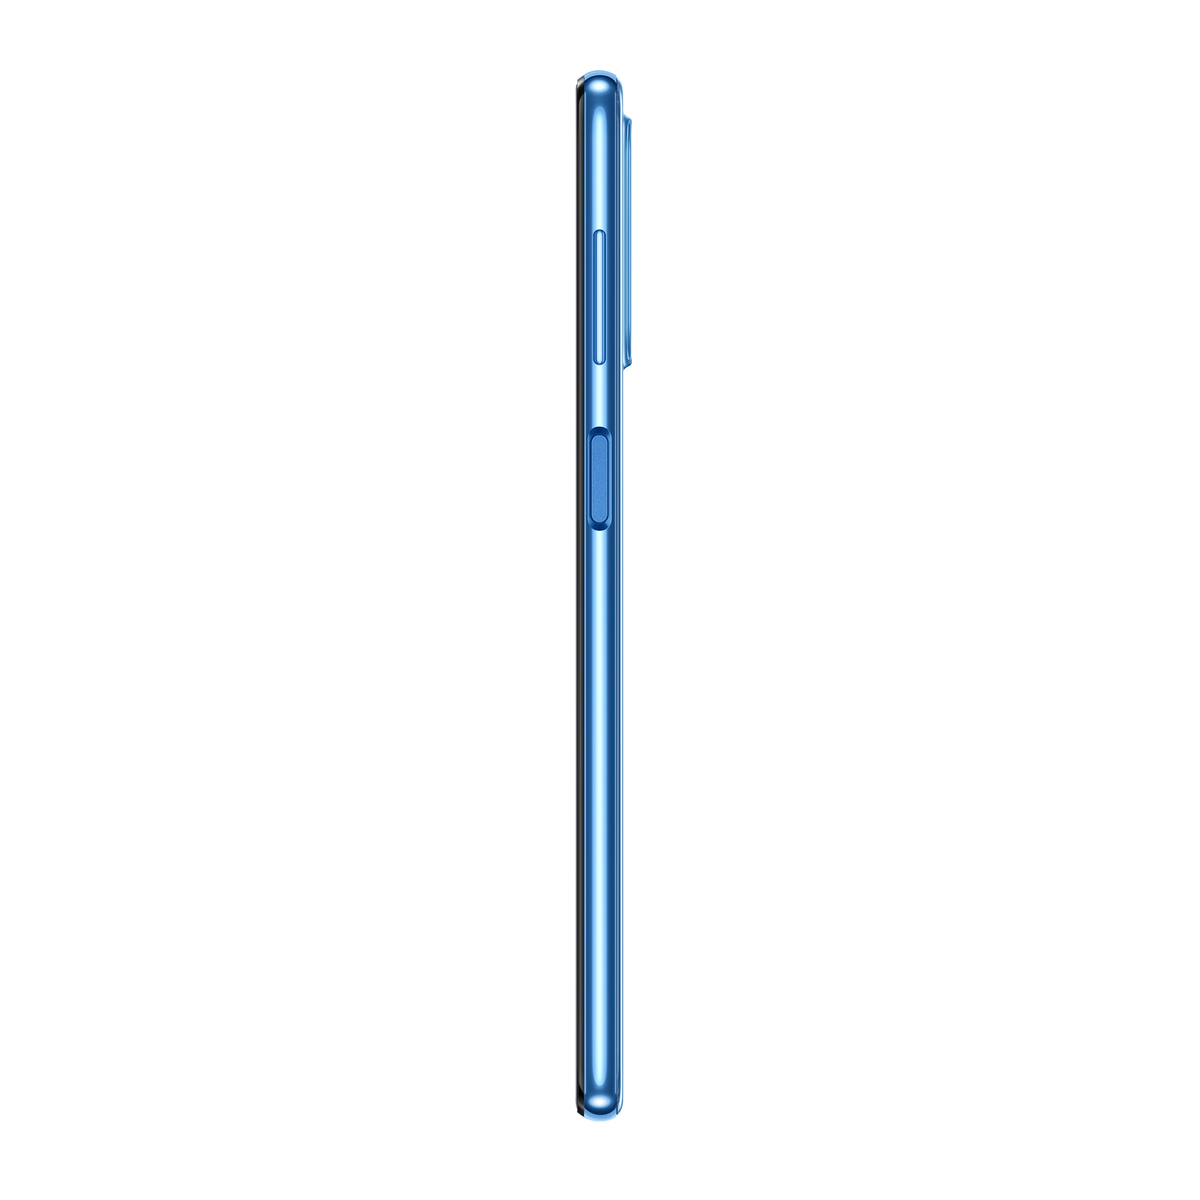 Samsung Galaxy M52,5G Dual SIM Smartphone, 128GB Storage and 8GB RAM, Light Blue